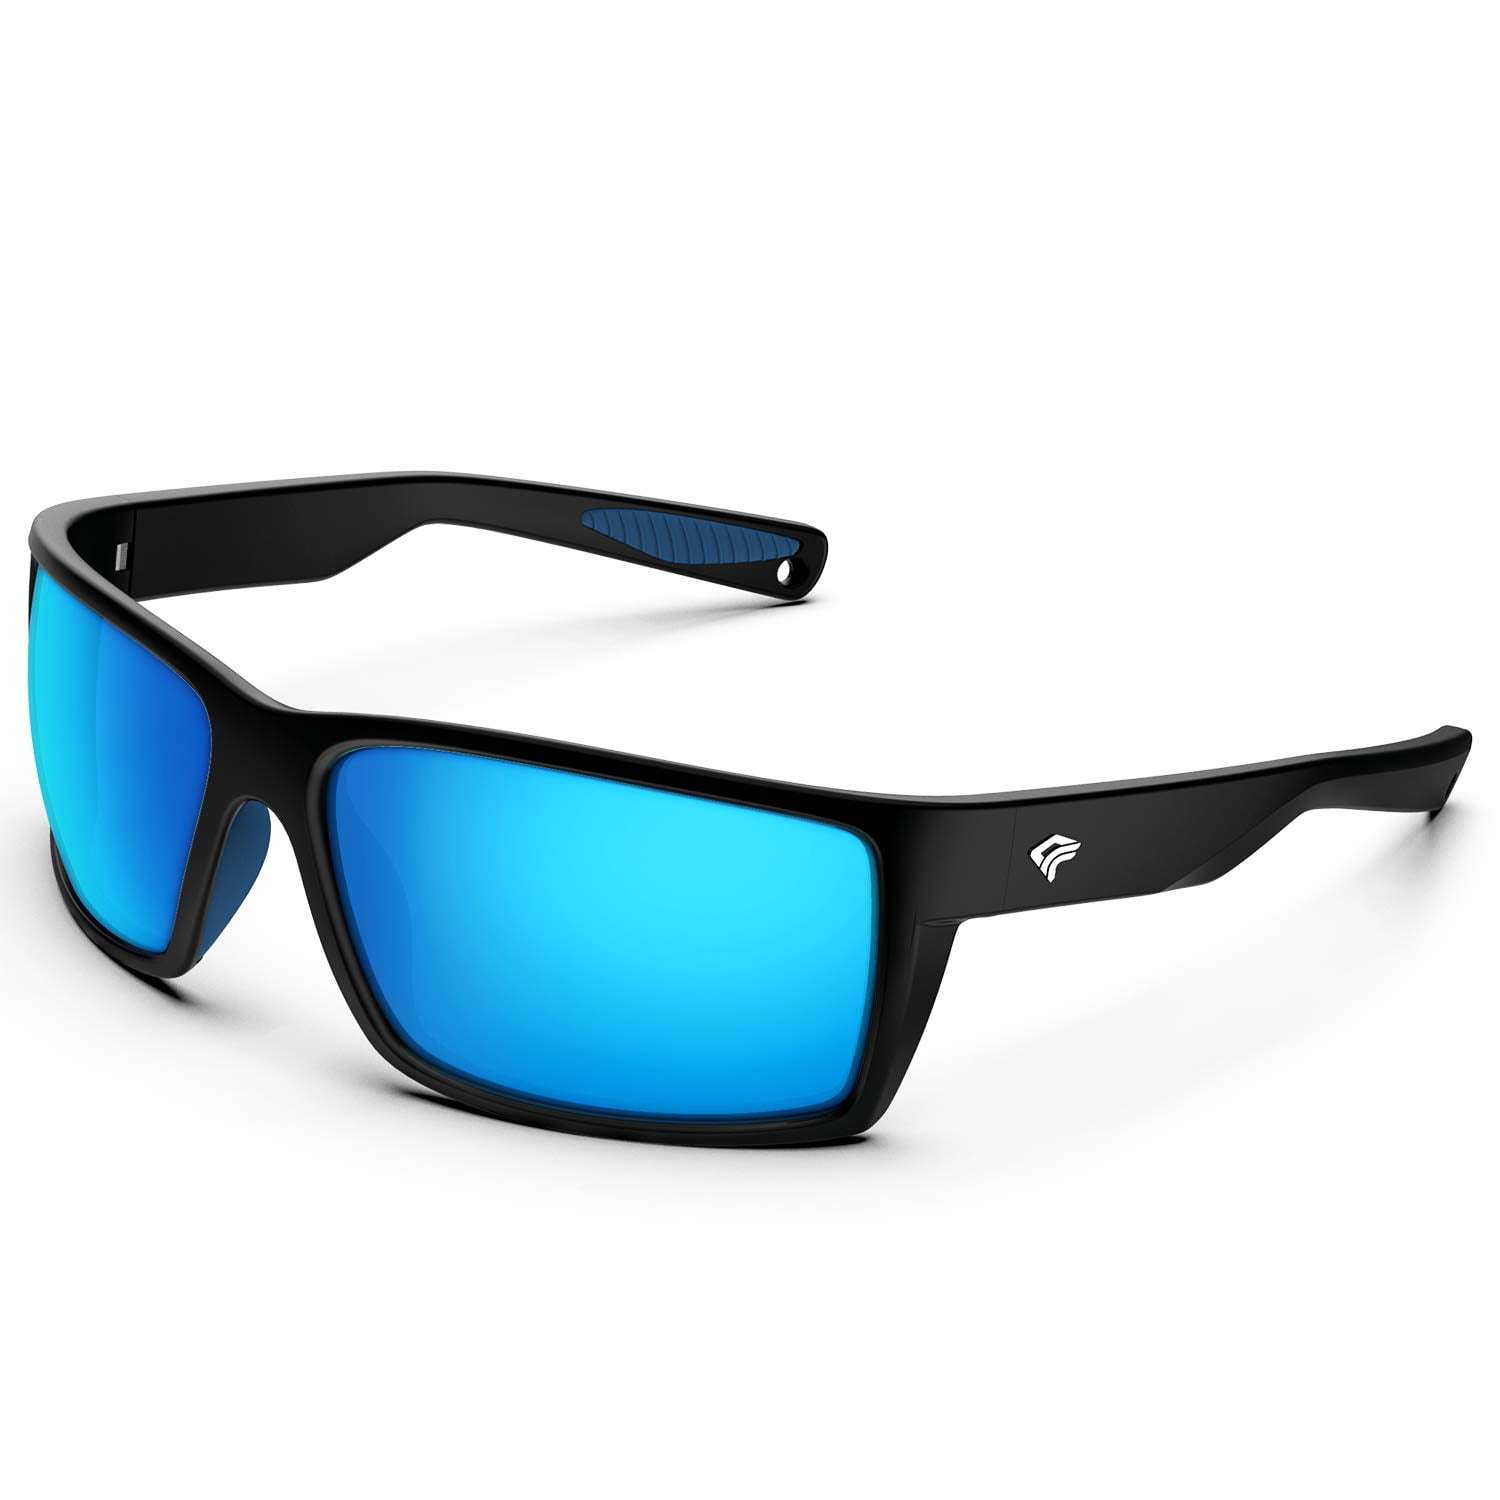 Gladys Tech Polarized Sports Sunglasses Fishing Sunglasses for Men Women Driving Shades Cycling Camping Hiking Sun Glasses UV400 Eyewear Blue, adult